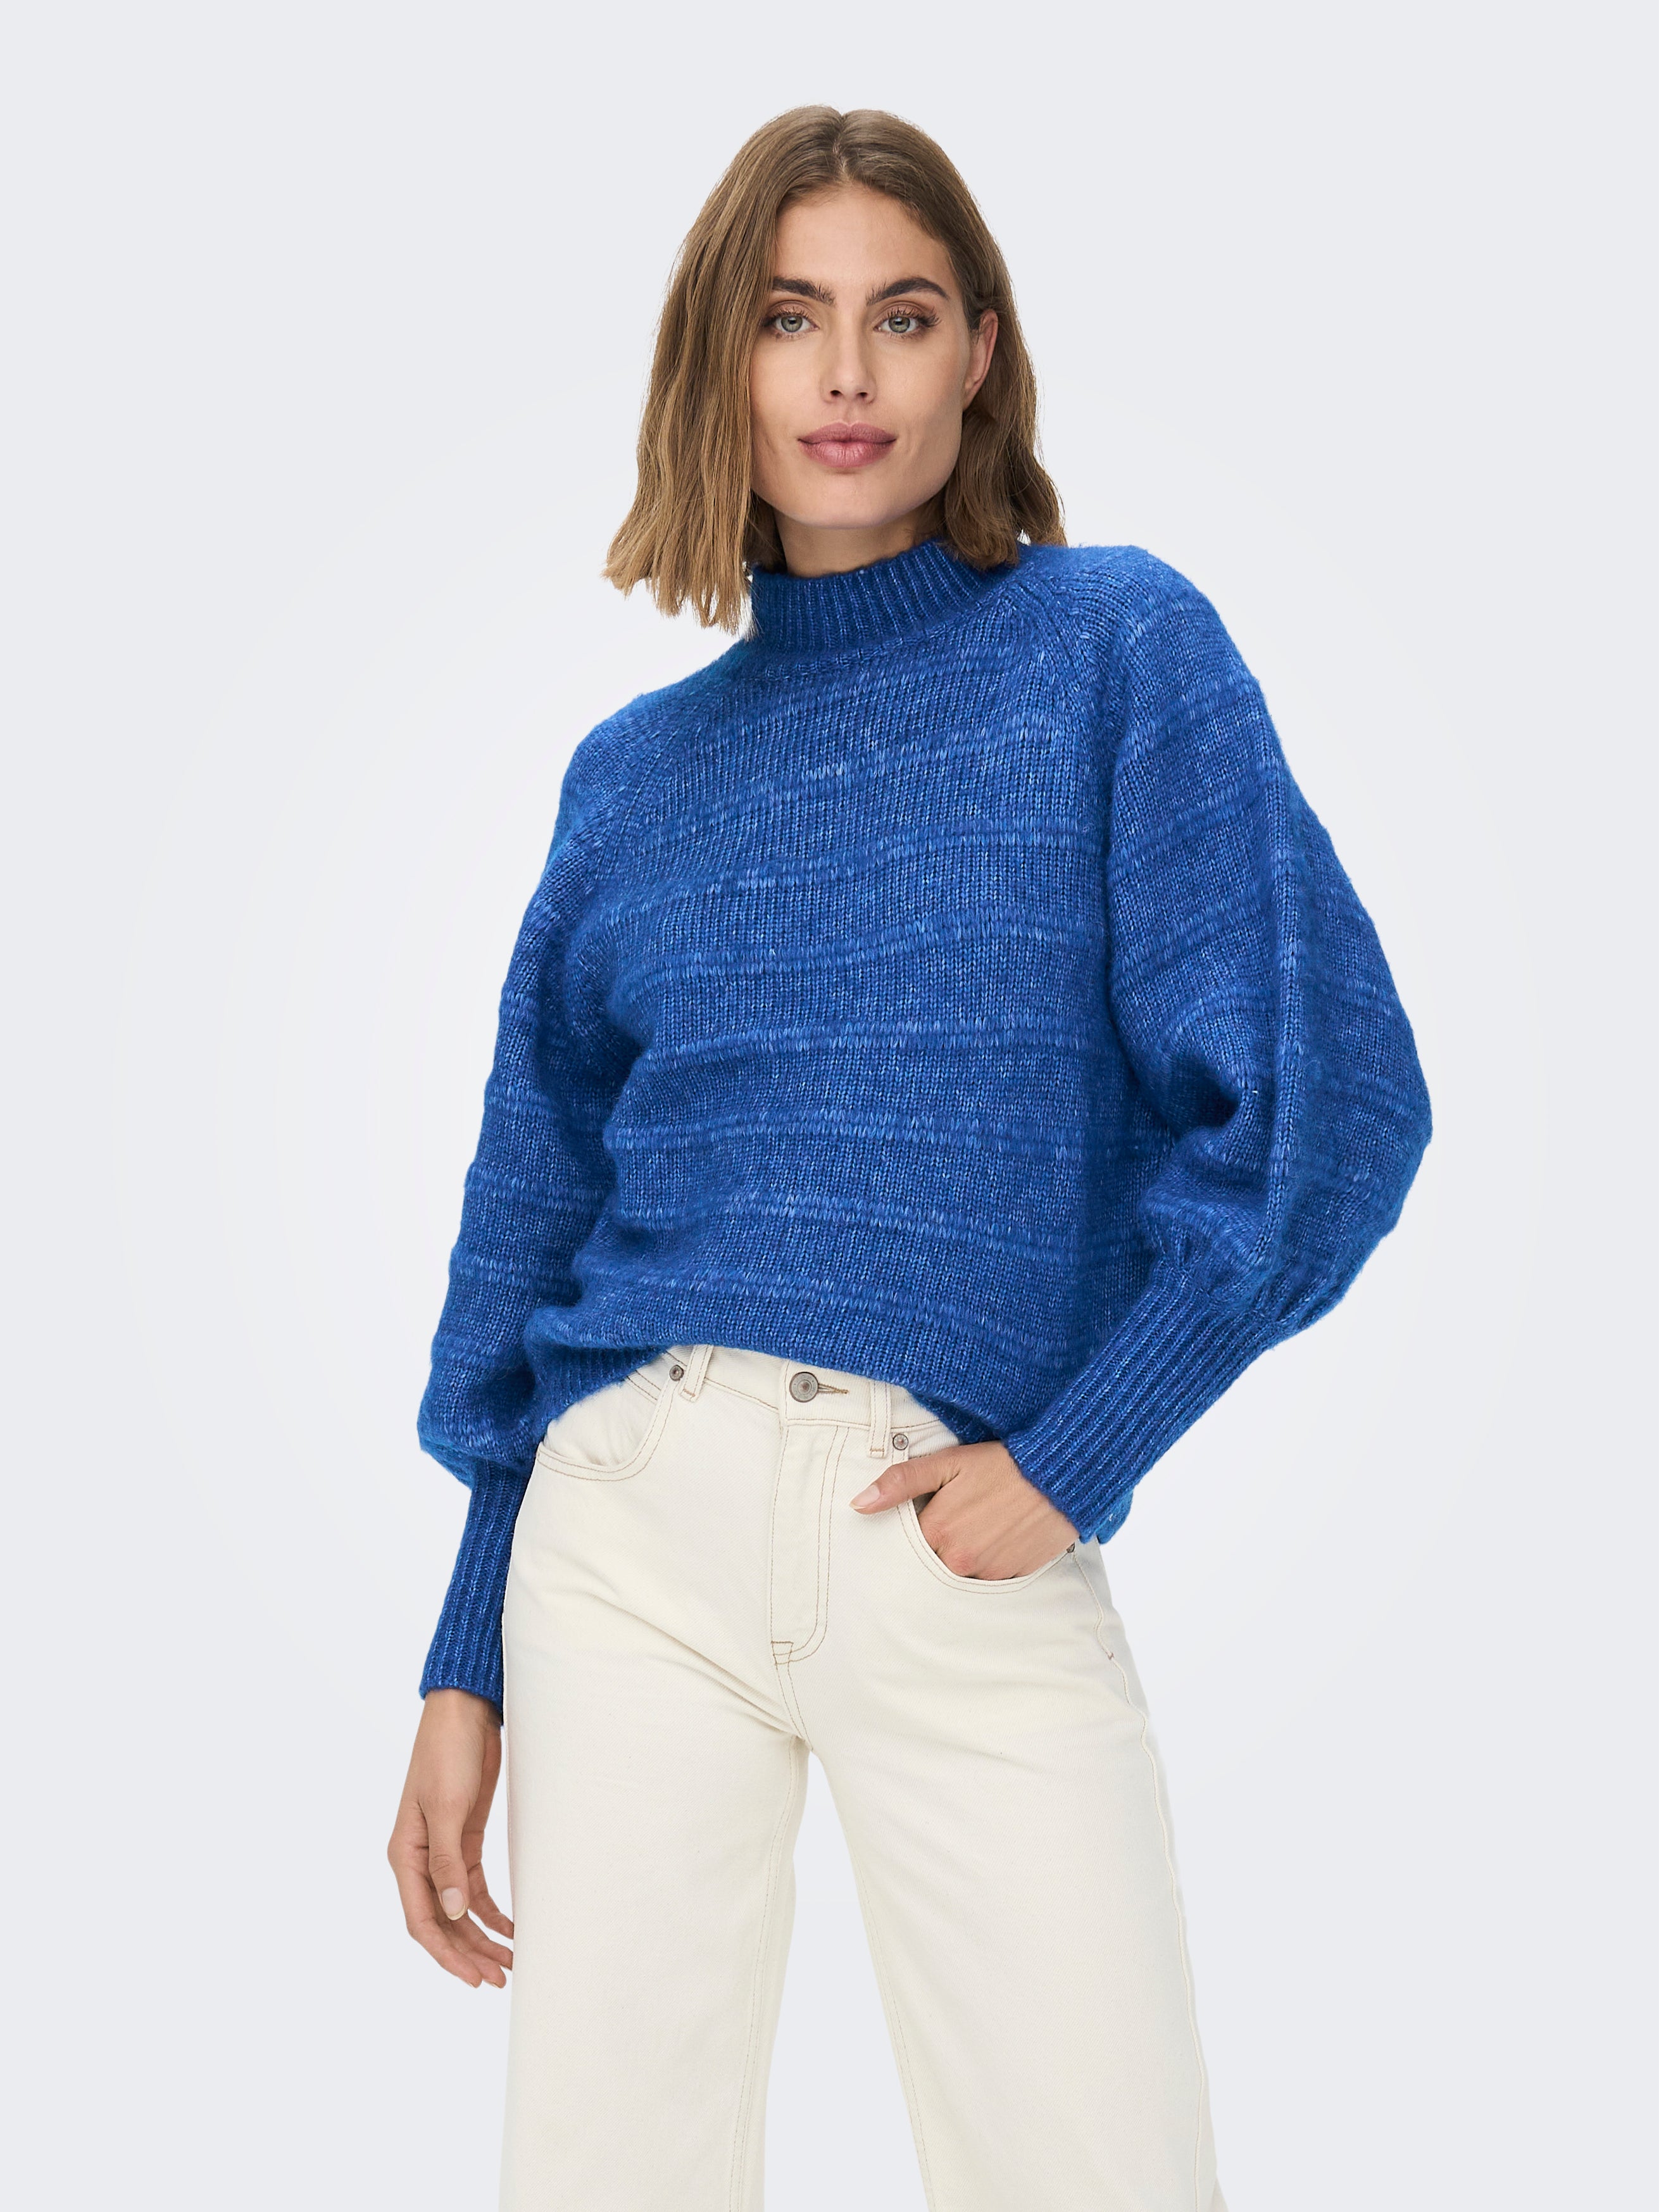 Fashion Knitwear Knitted Jackets Ashley Brooke Cardigan blue casual look 